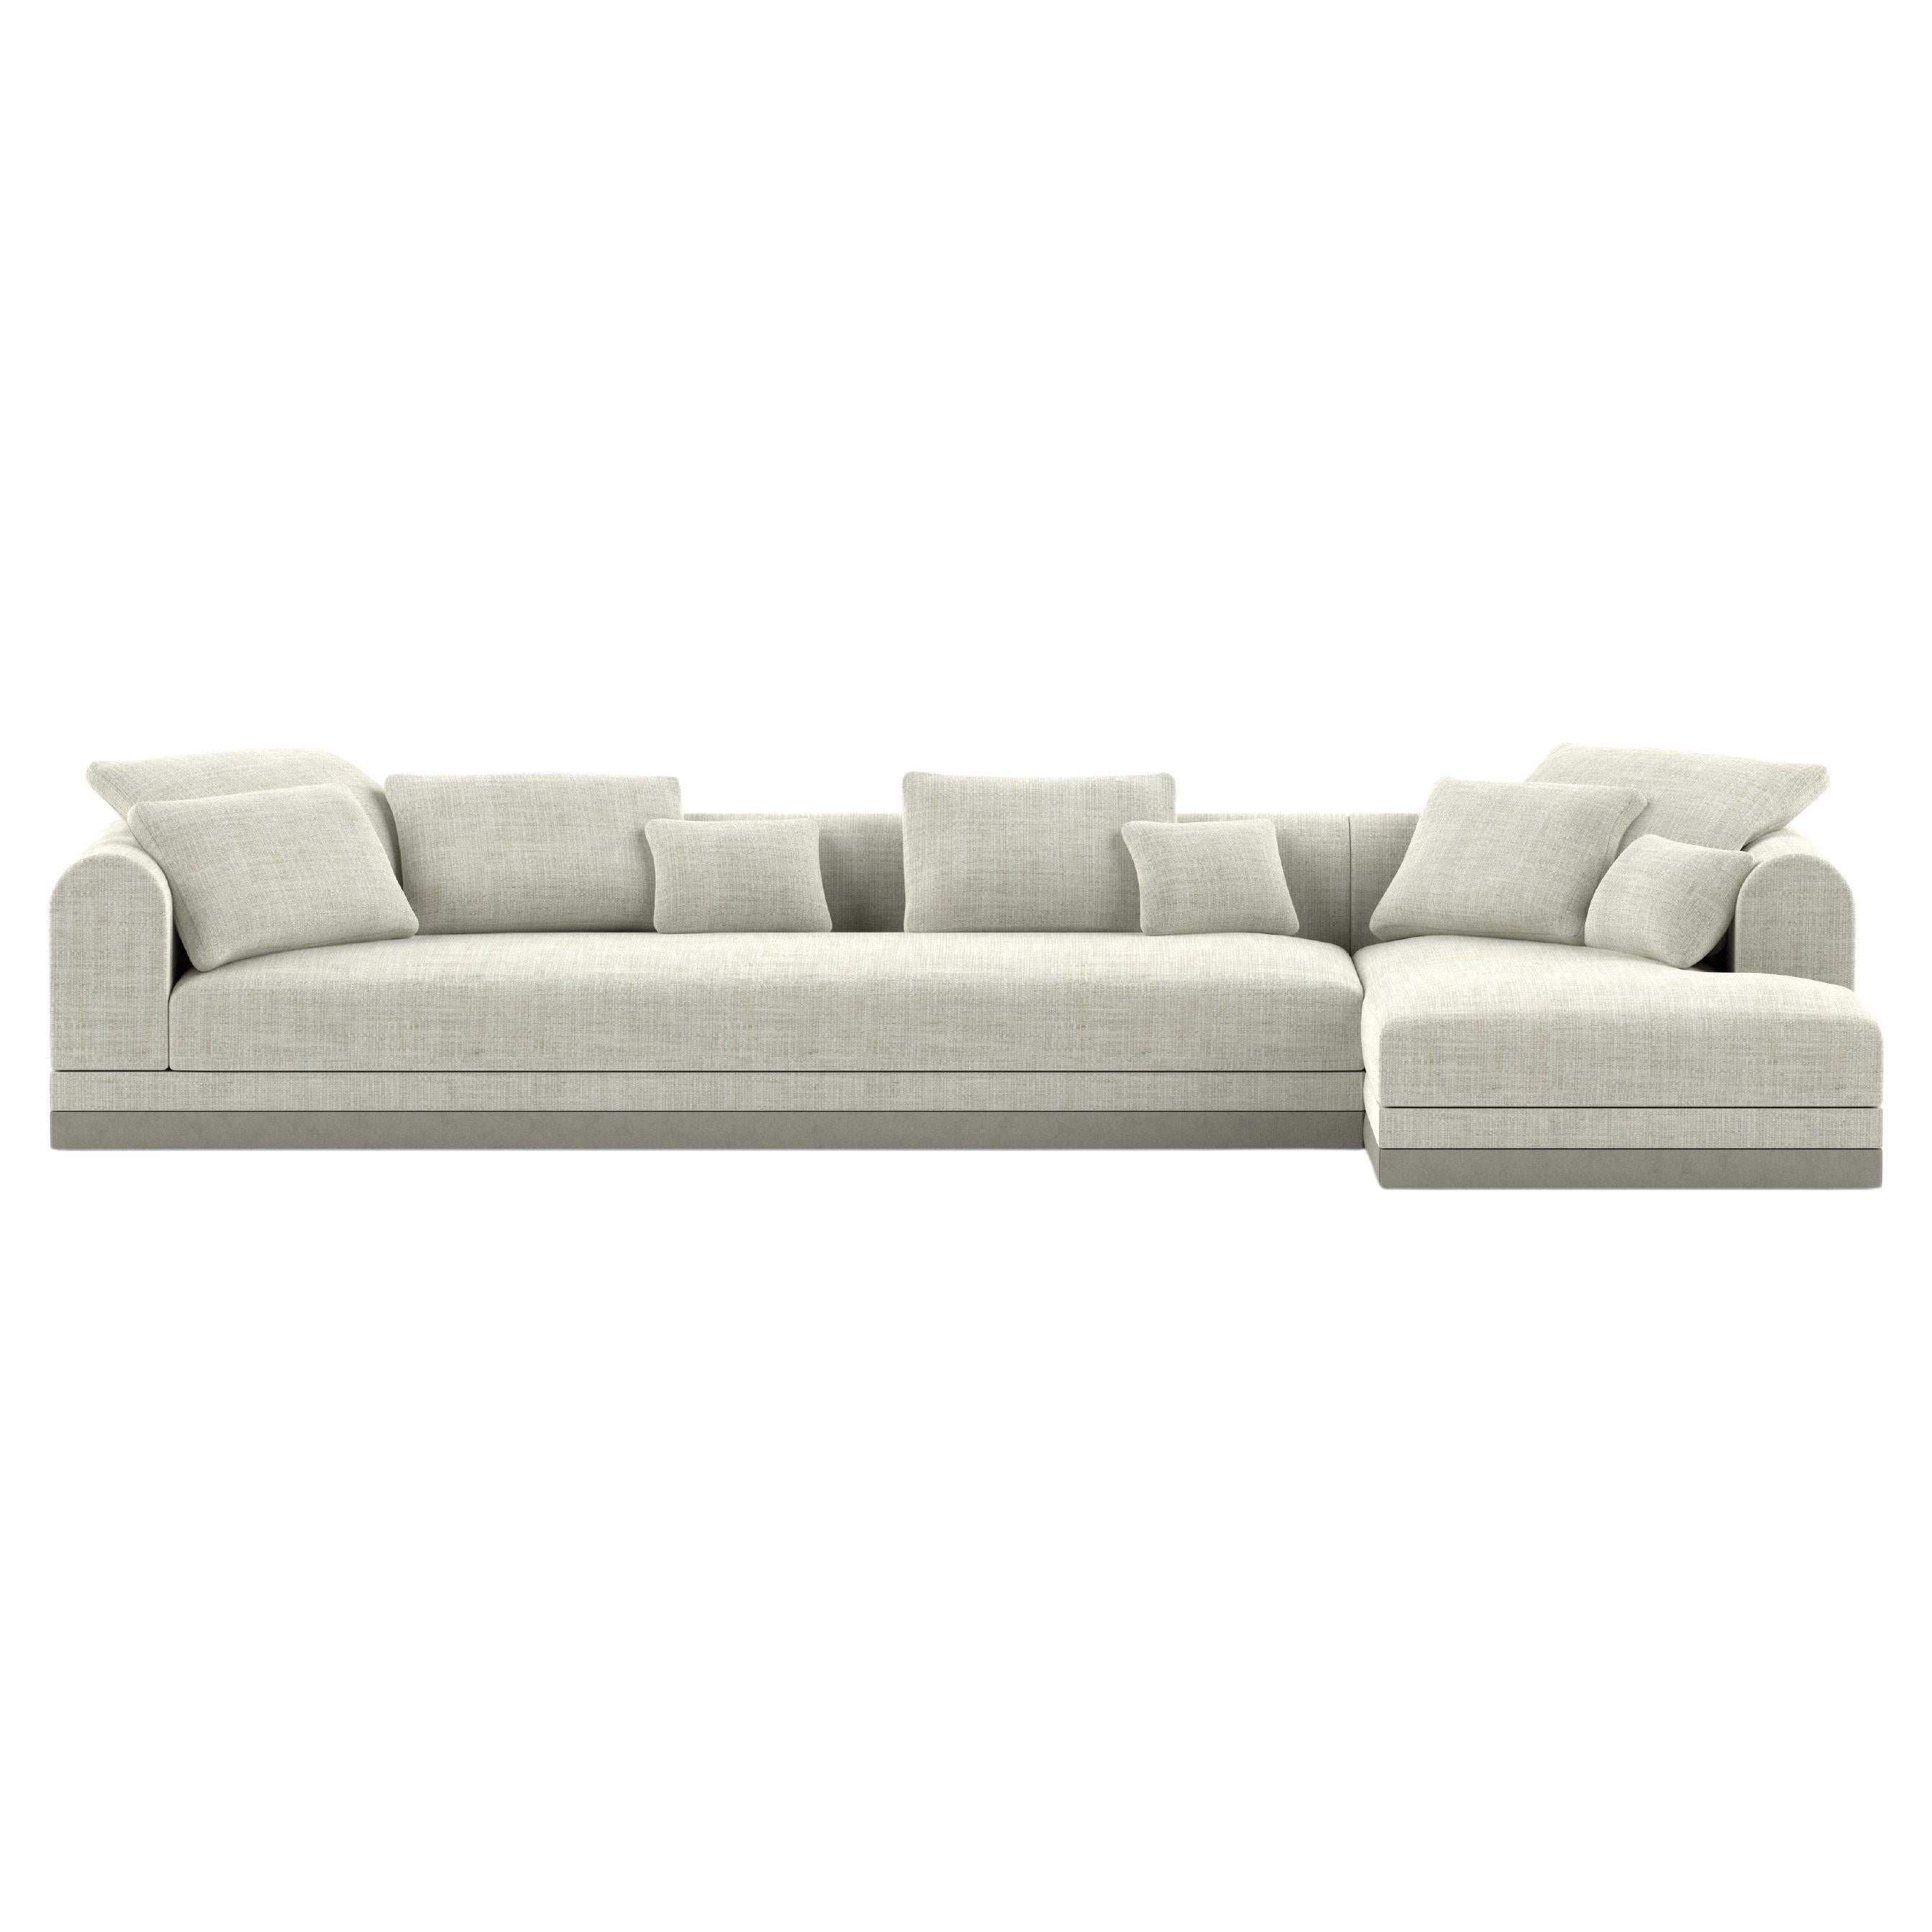 'Aqueduct' Contemporary Sofa by Poiat, Setup 2, Fox 02, Low Plinth For Sale